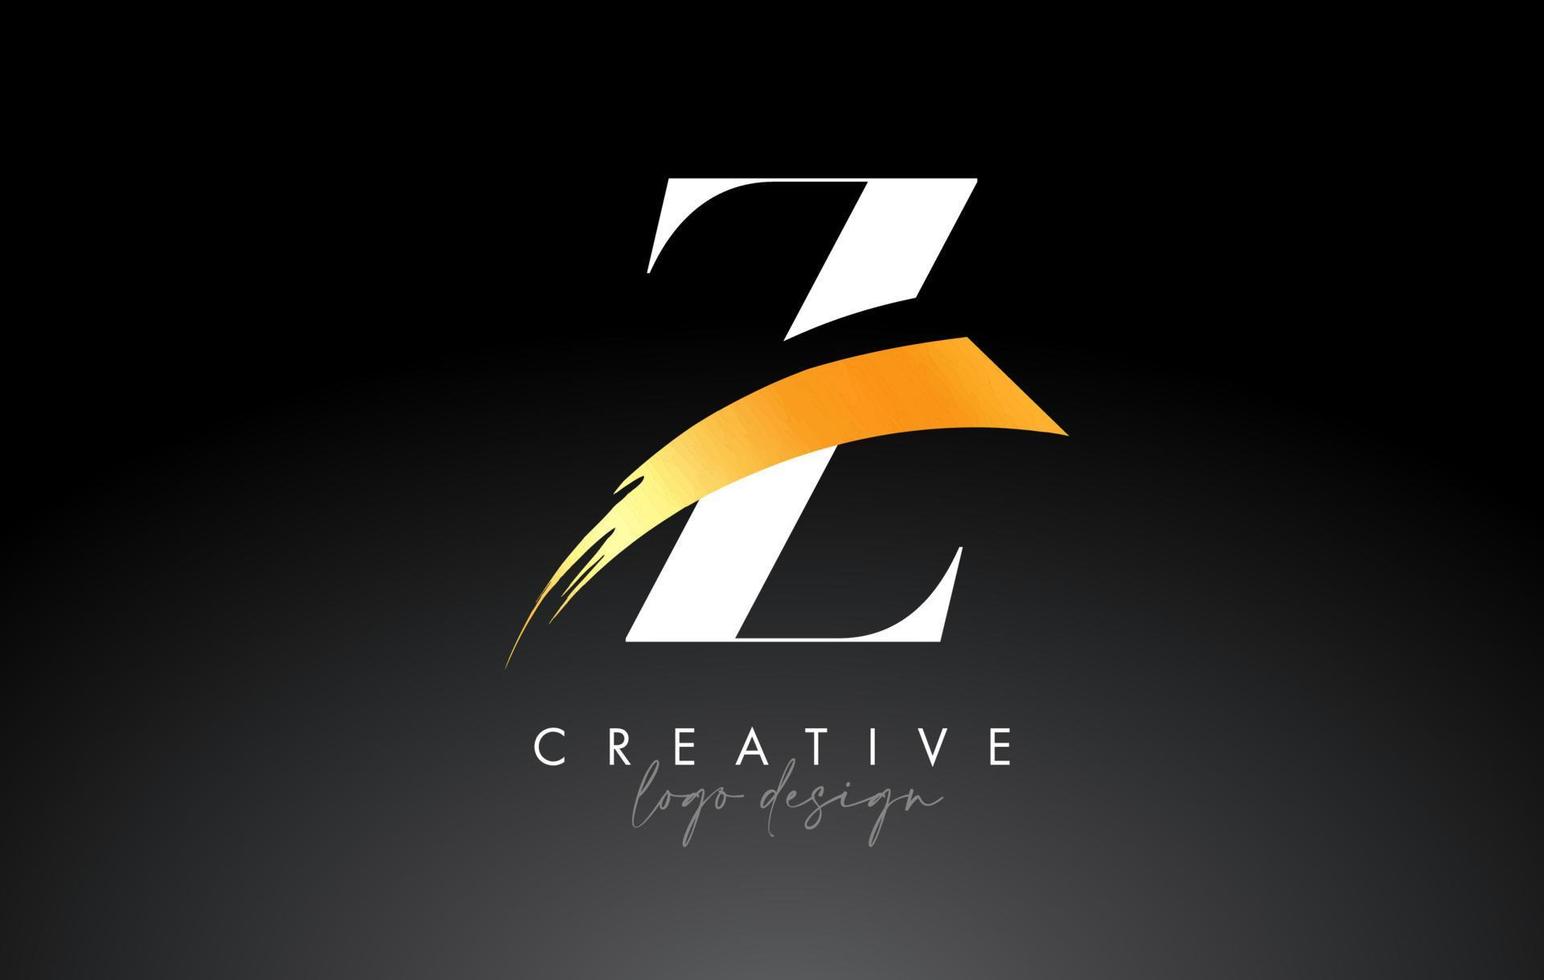 Golden Brush Letter Z Logo Design with Creative Artistic Paint Brush Stroke and Modern Look Vector